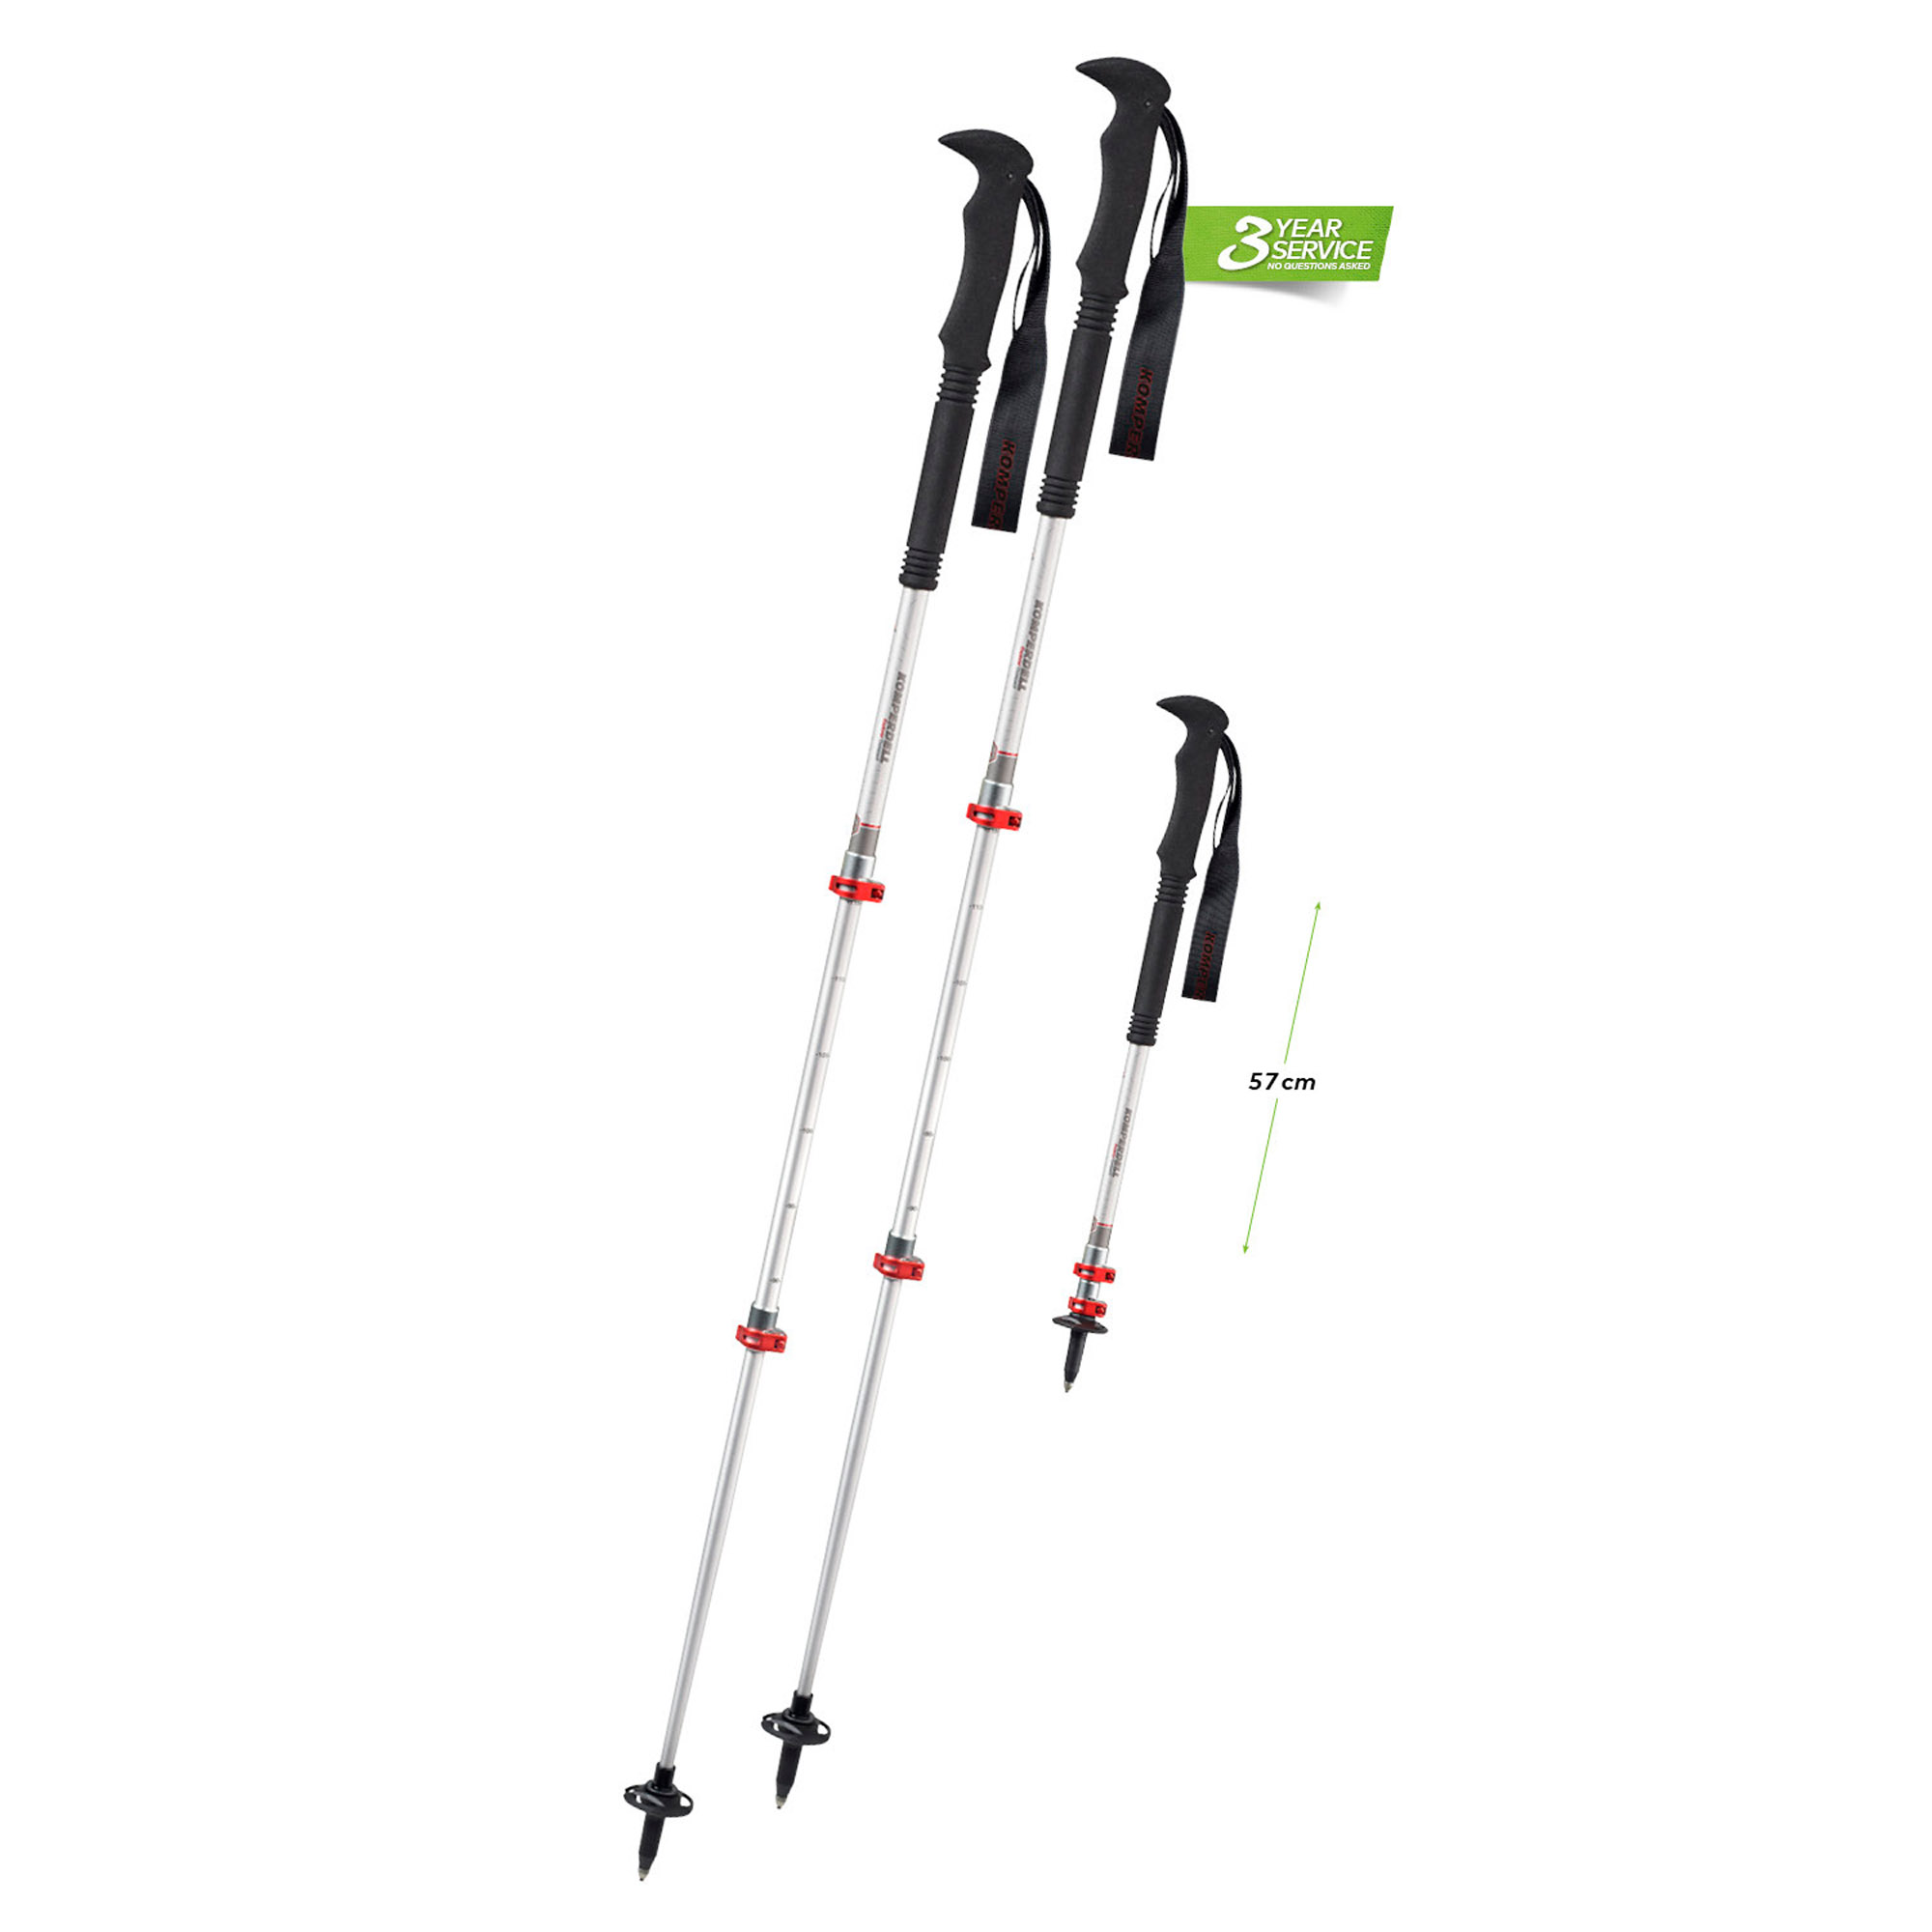 Komperdell Hikemaster Compact Powerlock Poles black/orange 2019 hiking stick